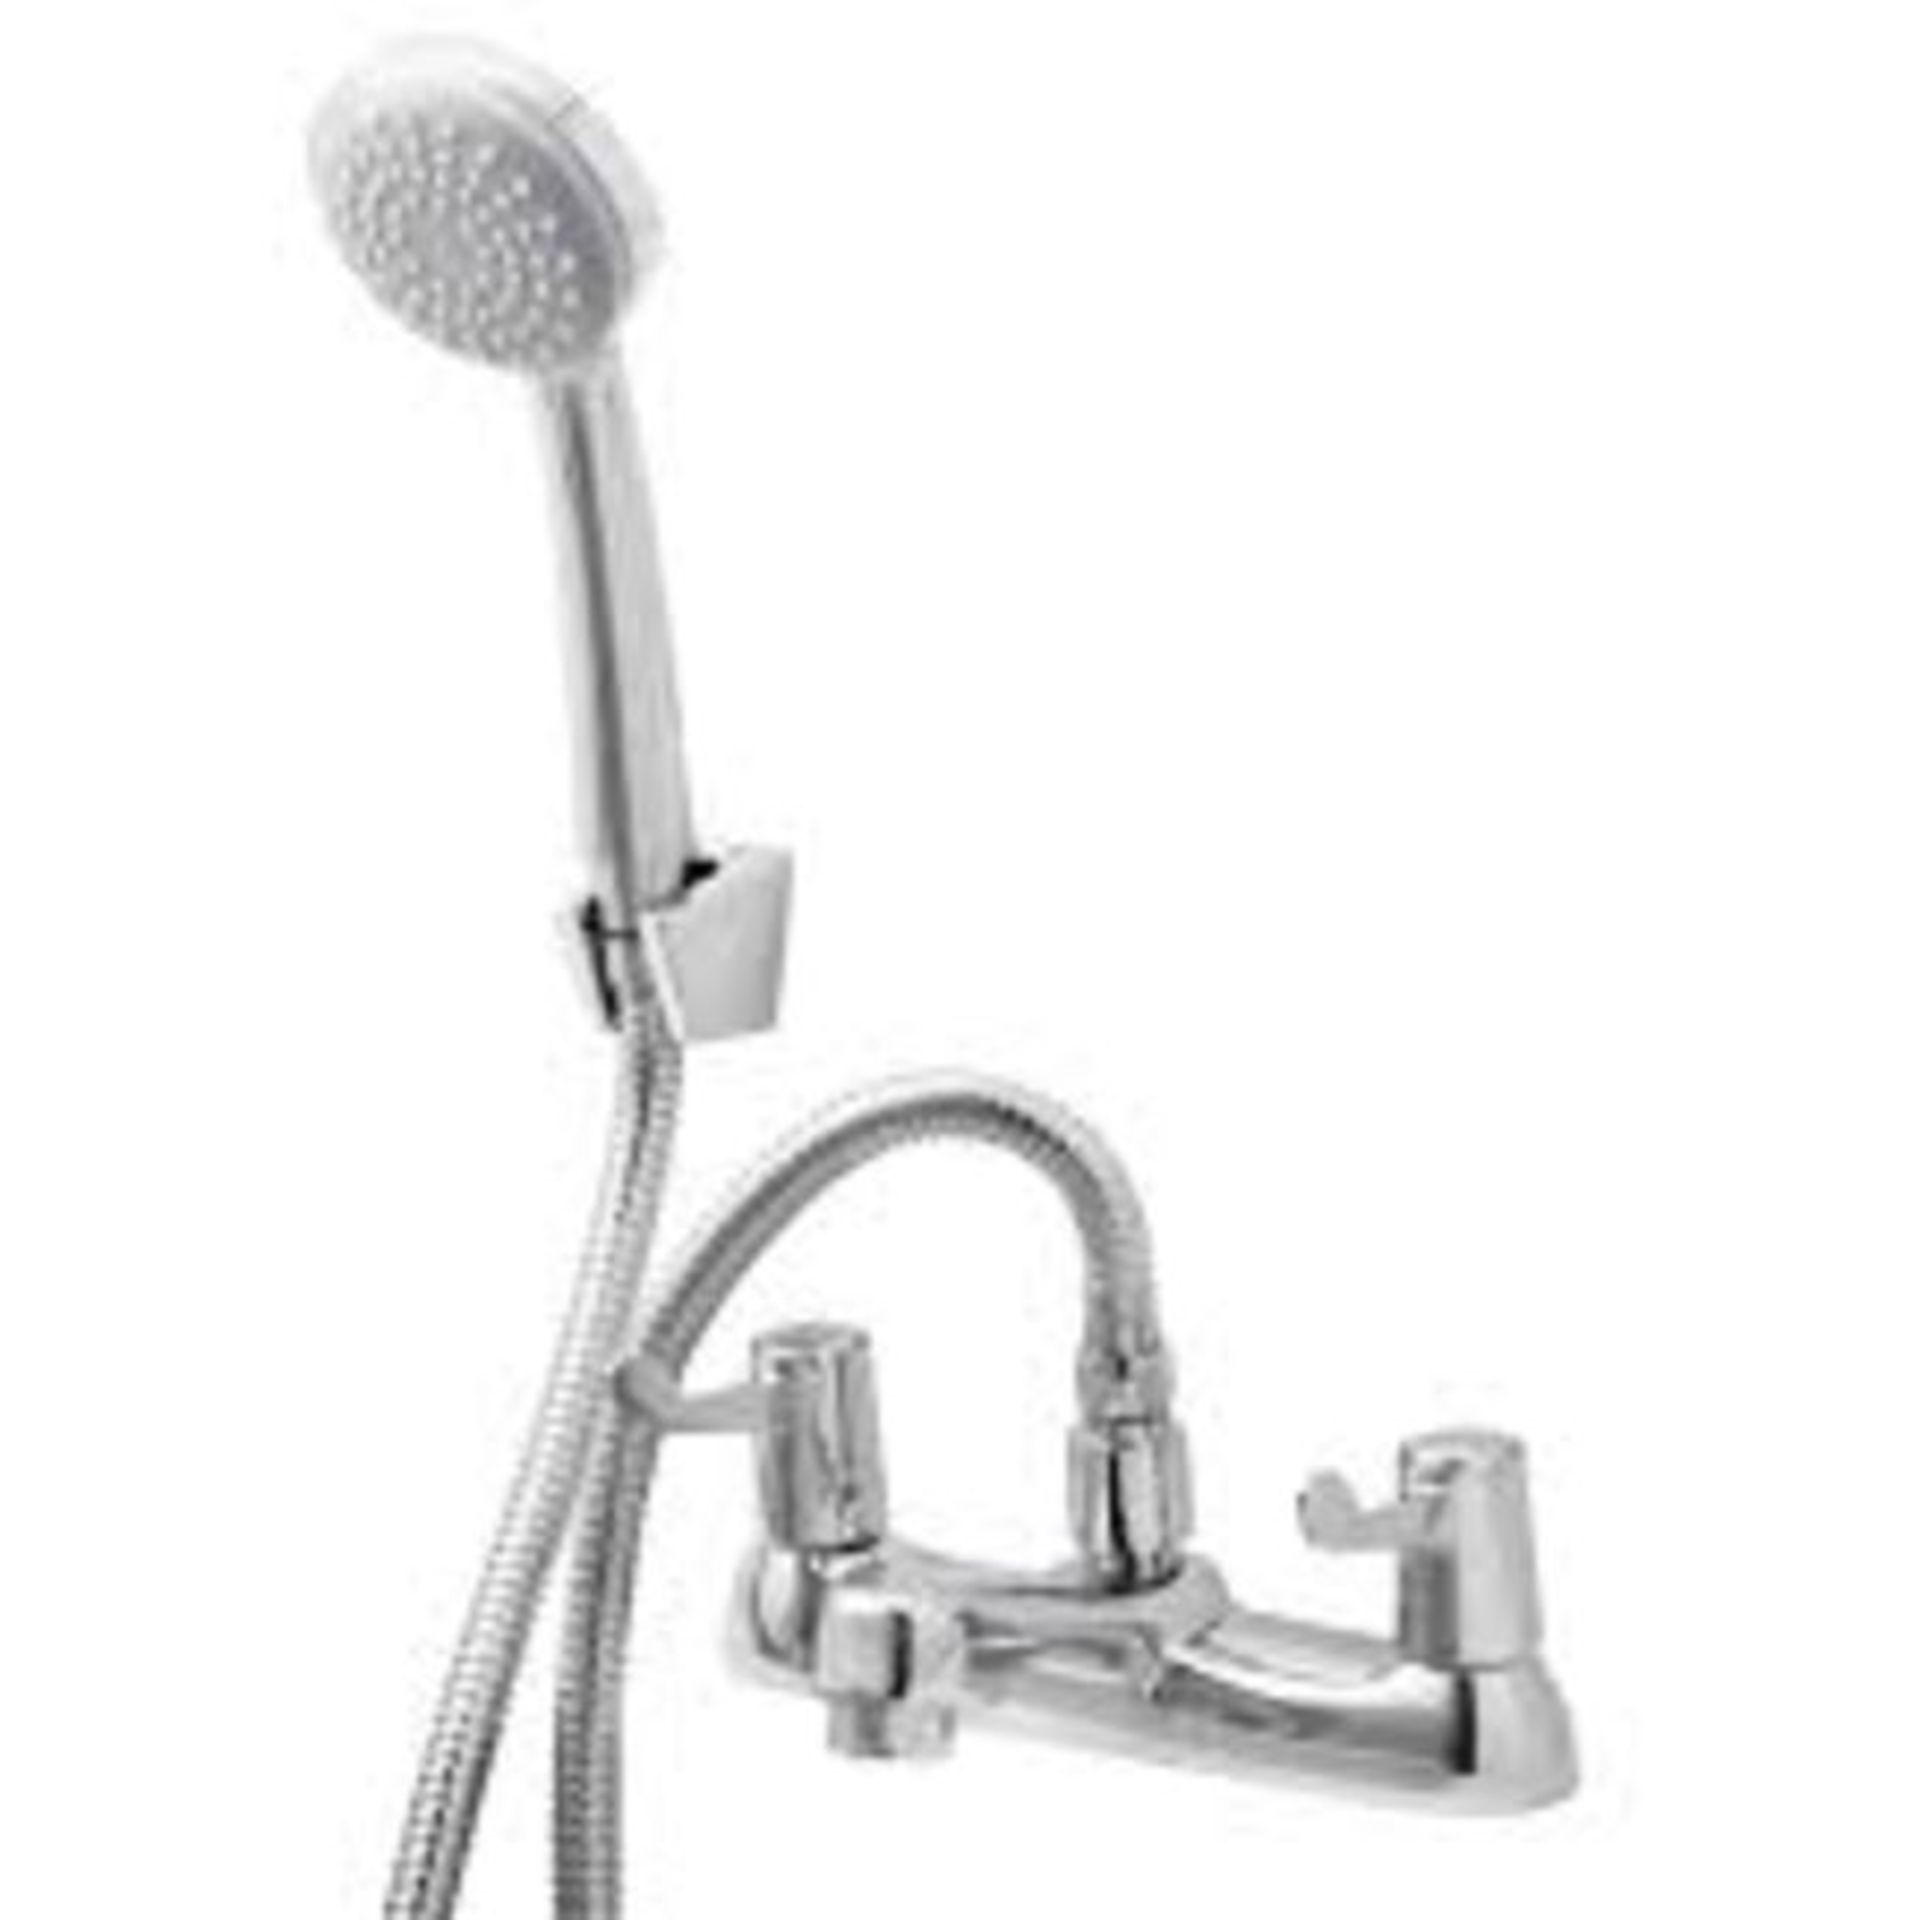 (AQ8) Calp Chrome-plated Bath Shower mixer Tap. This traditional style chrome bath shower mixer...